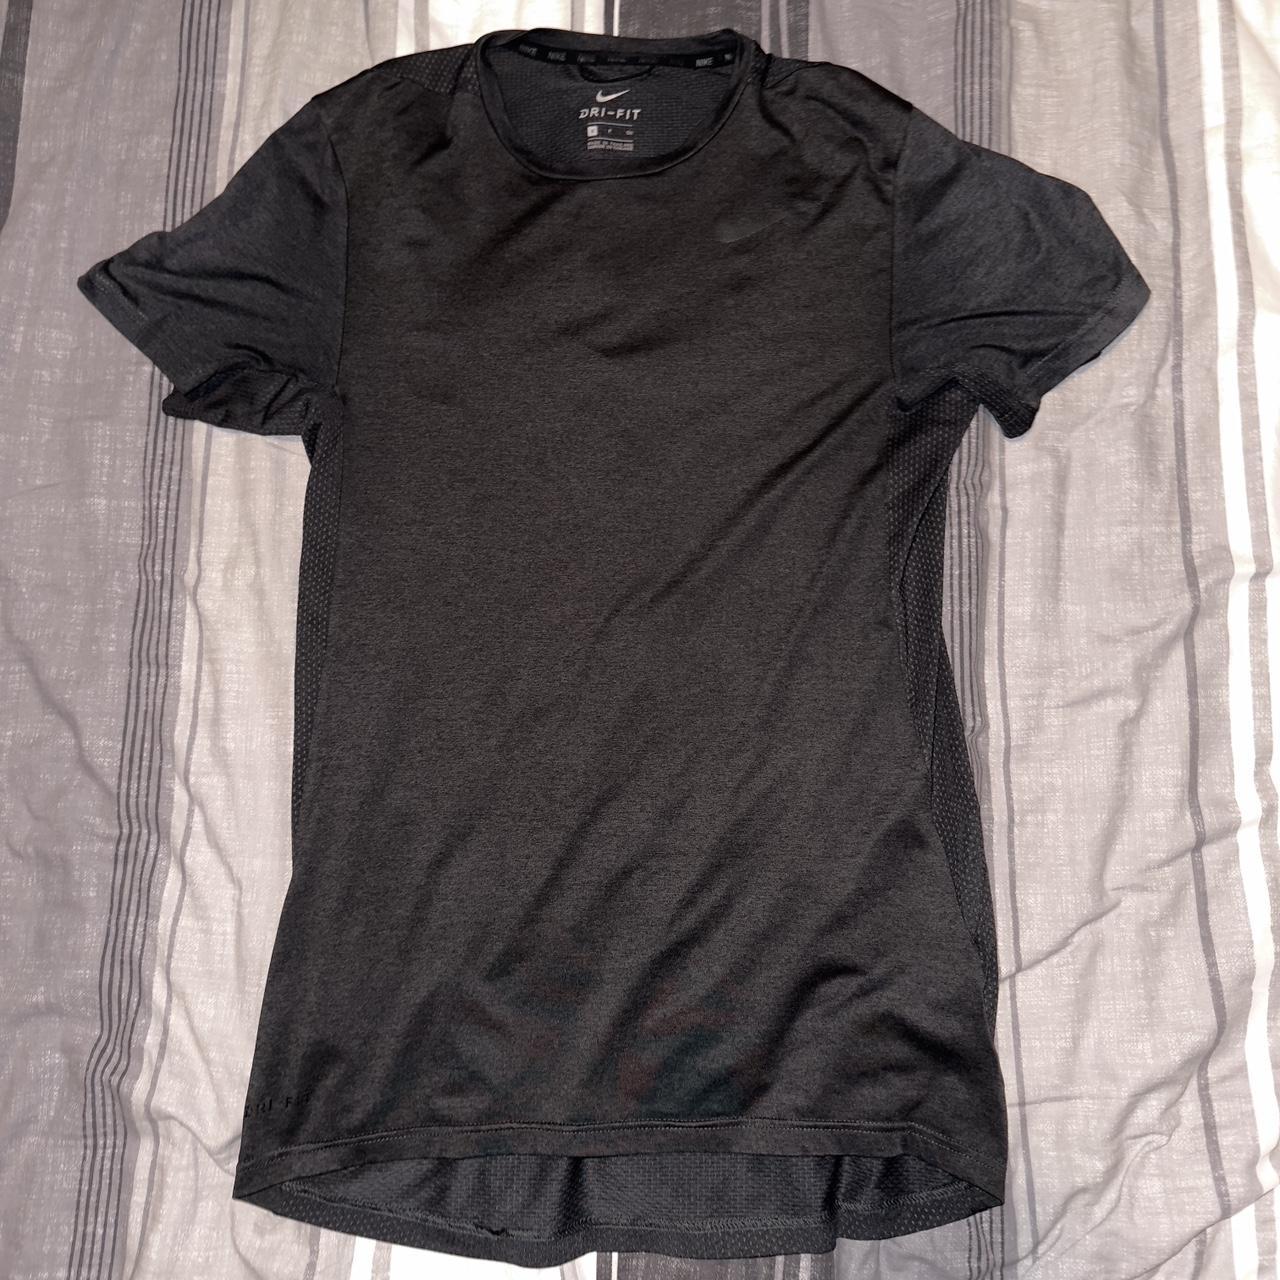 Black Nike Running T-Shirt - Depop